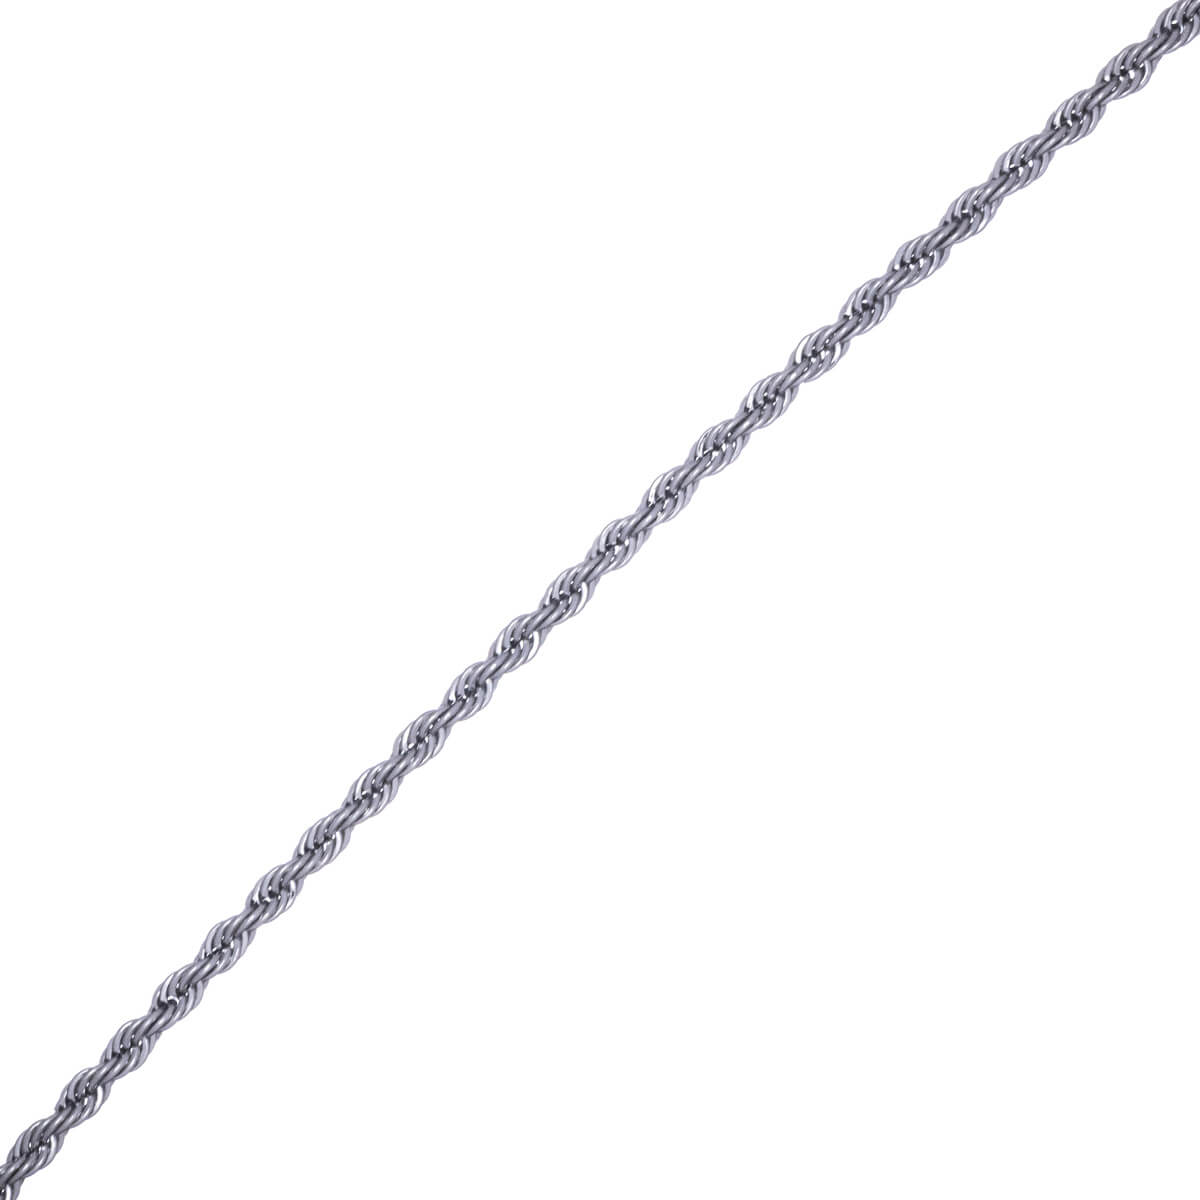 Tunn stålhalsbanan Cordell 55 cm (stål 316L)